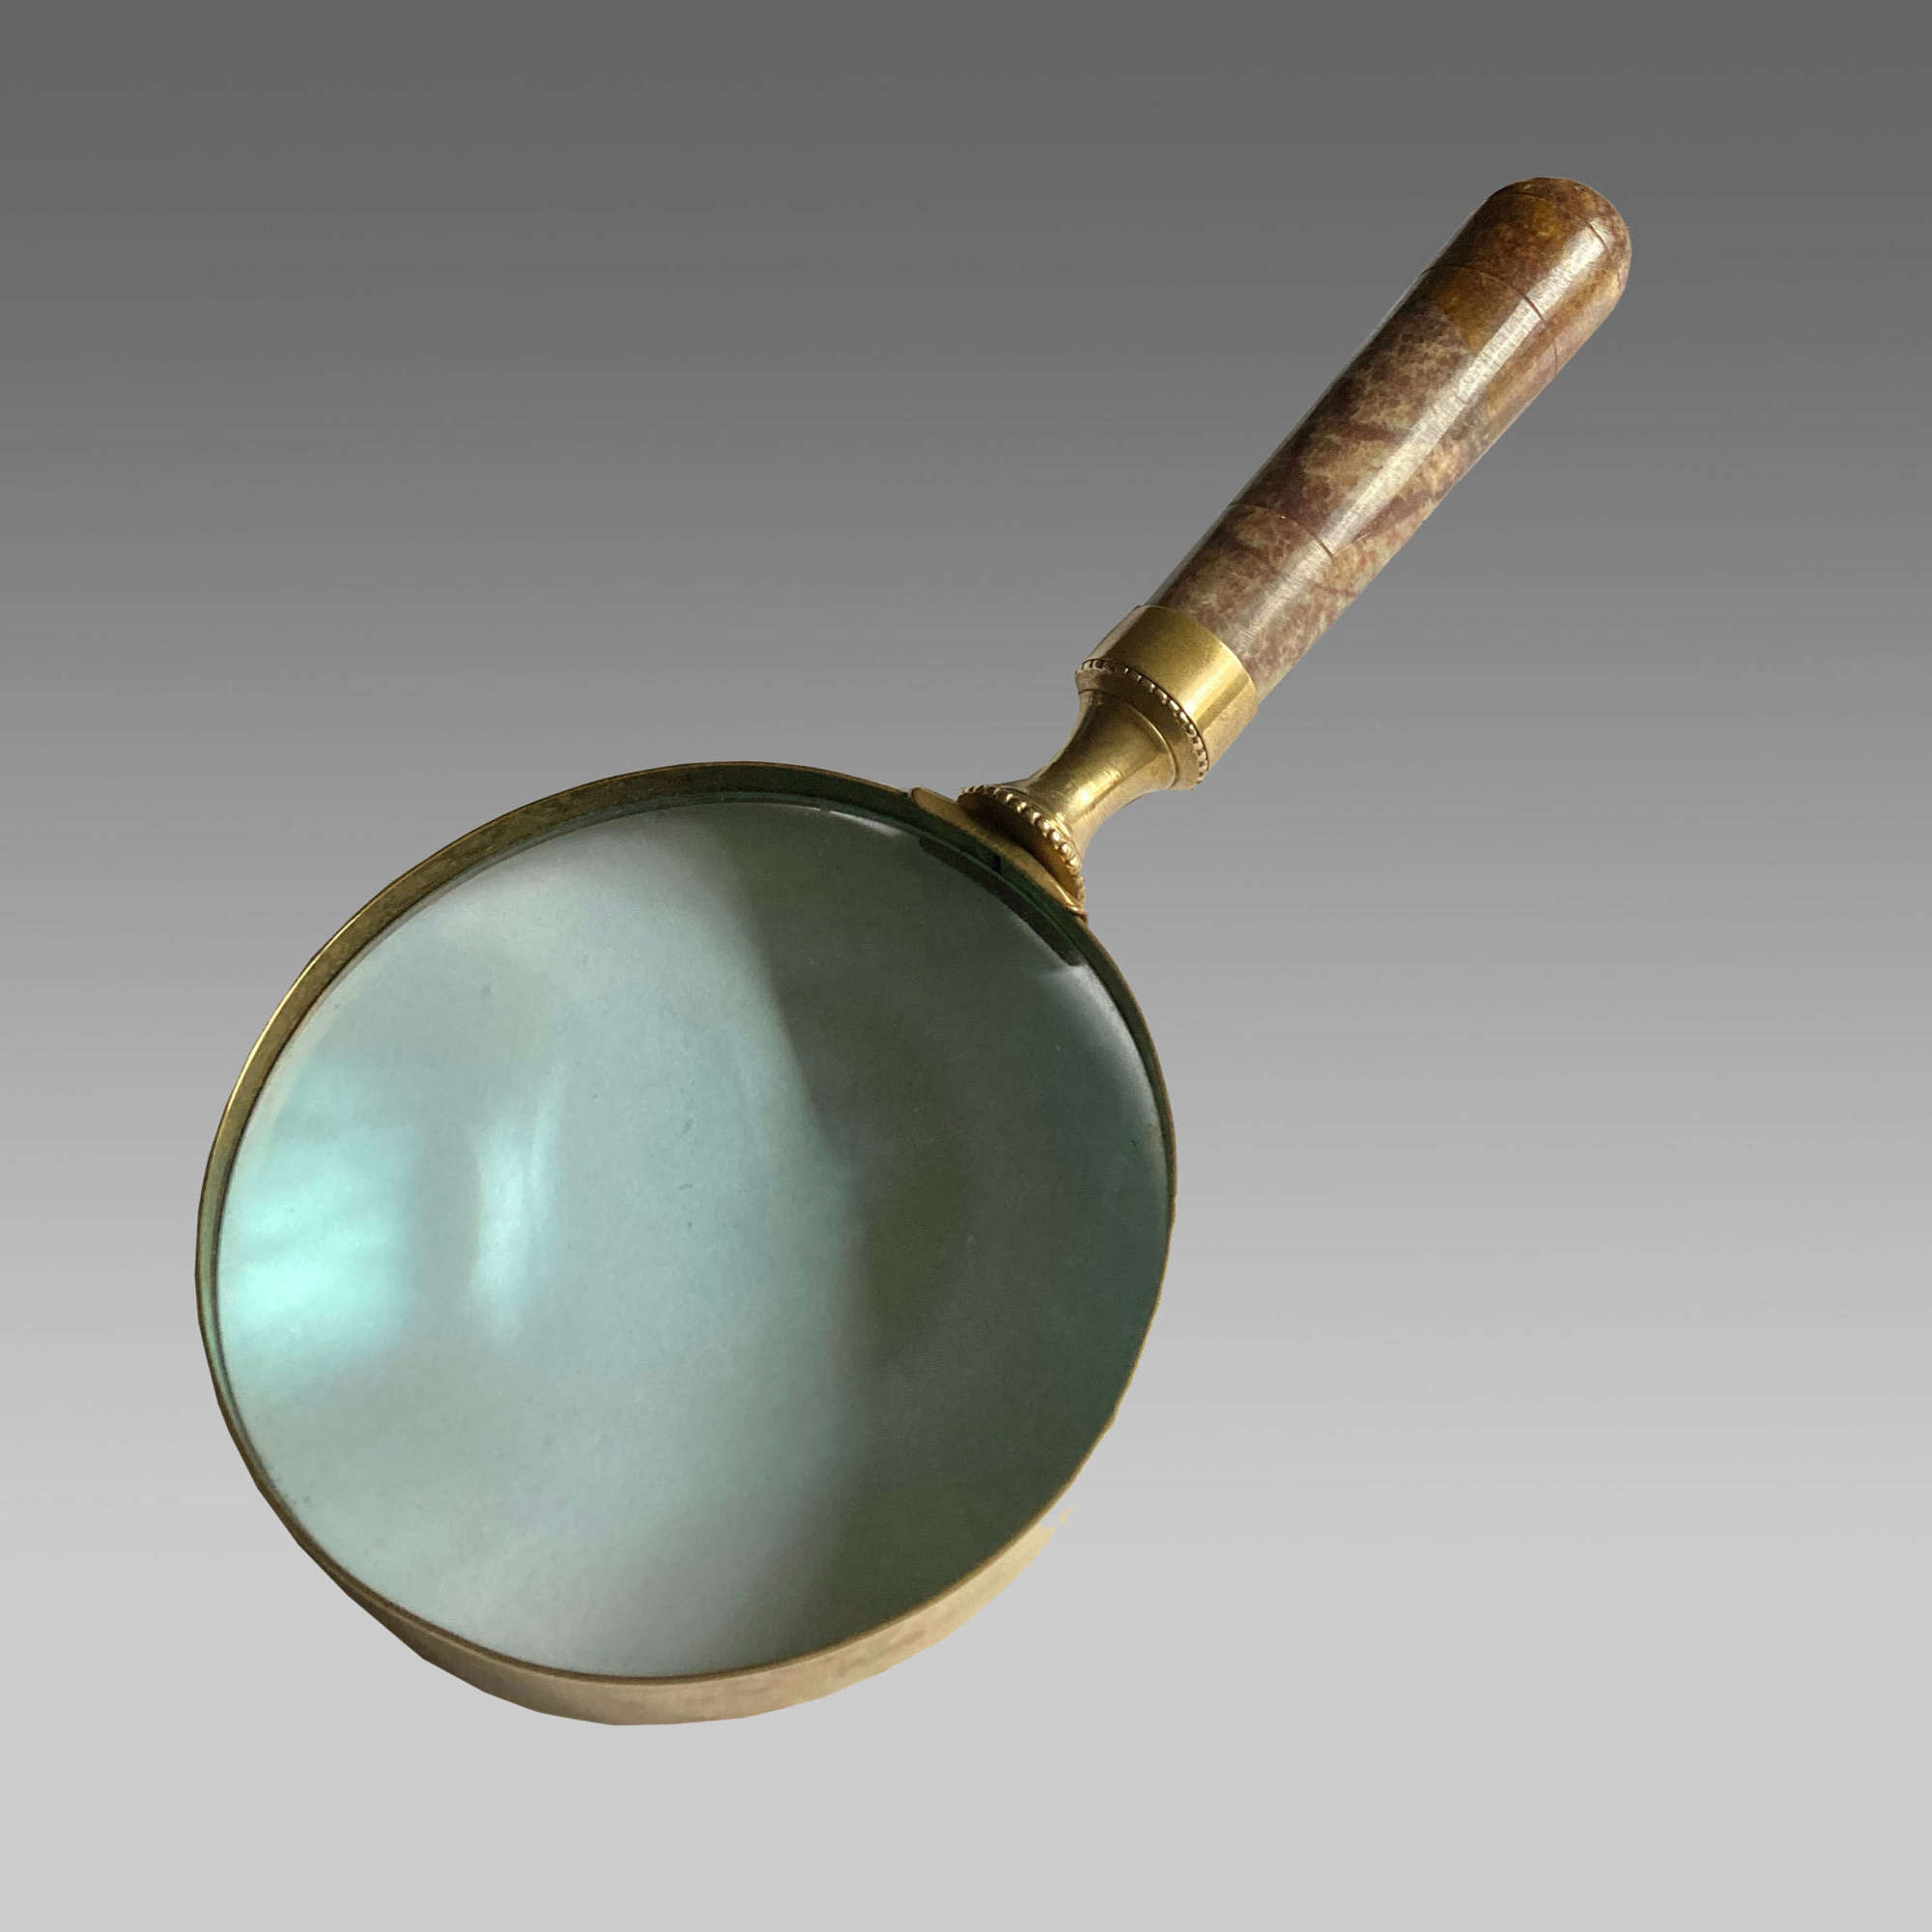 Edwardian brass-mounted magnifying glass